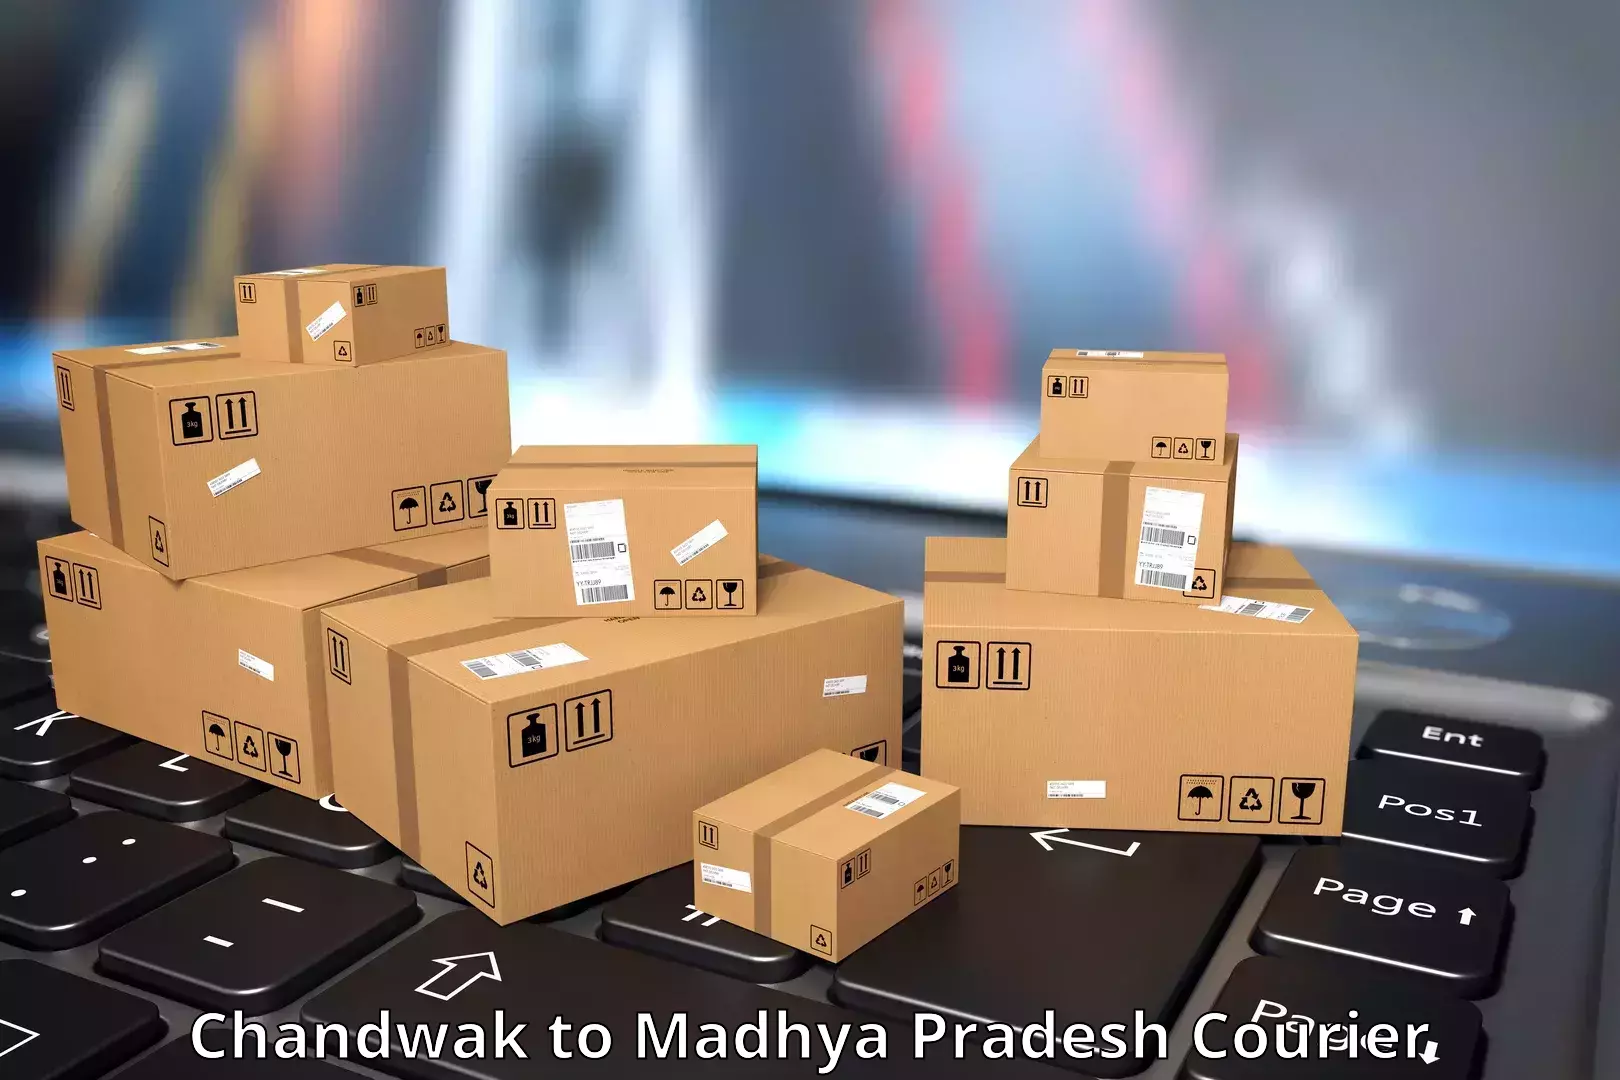 State-of-the-art courier technology Chandwak to Madhya Pradesh